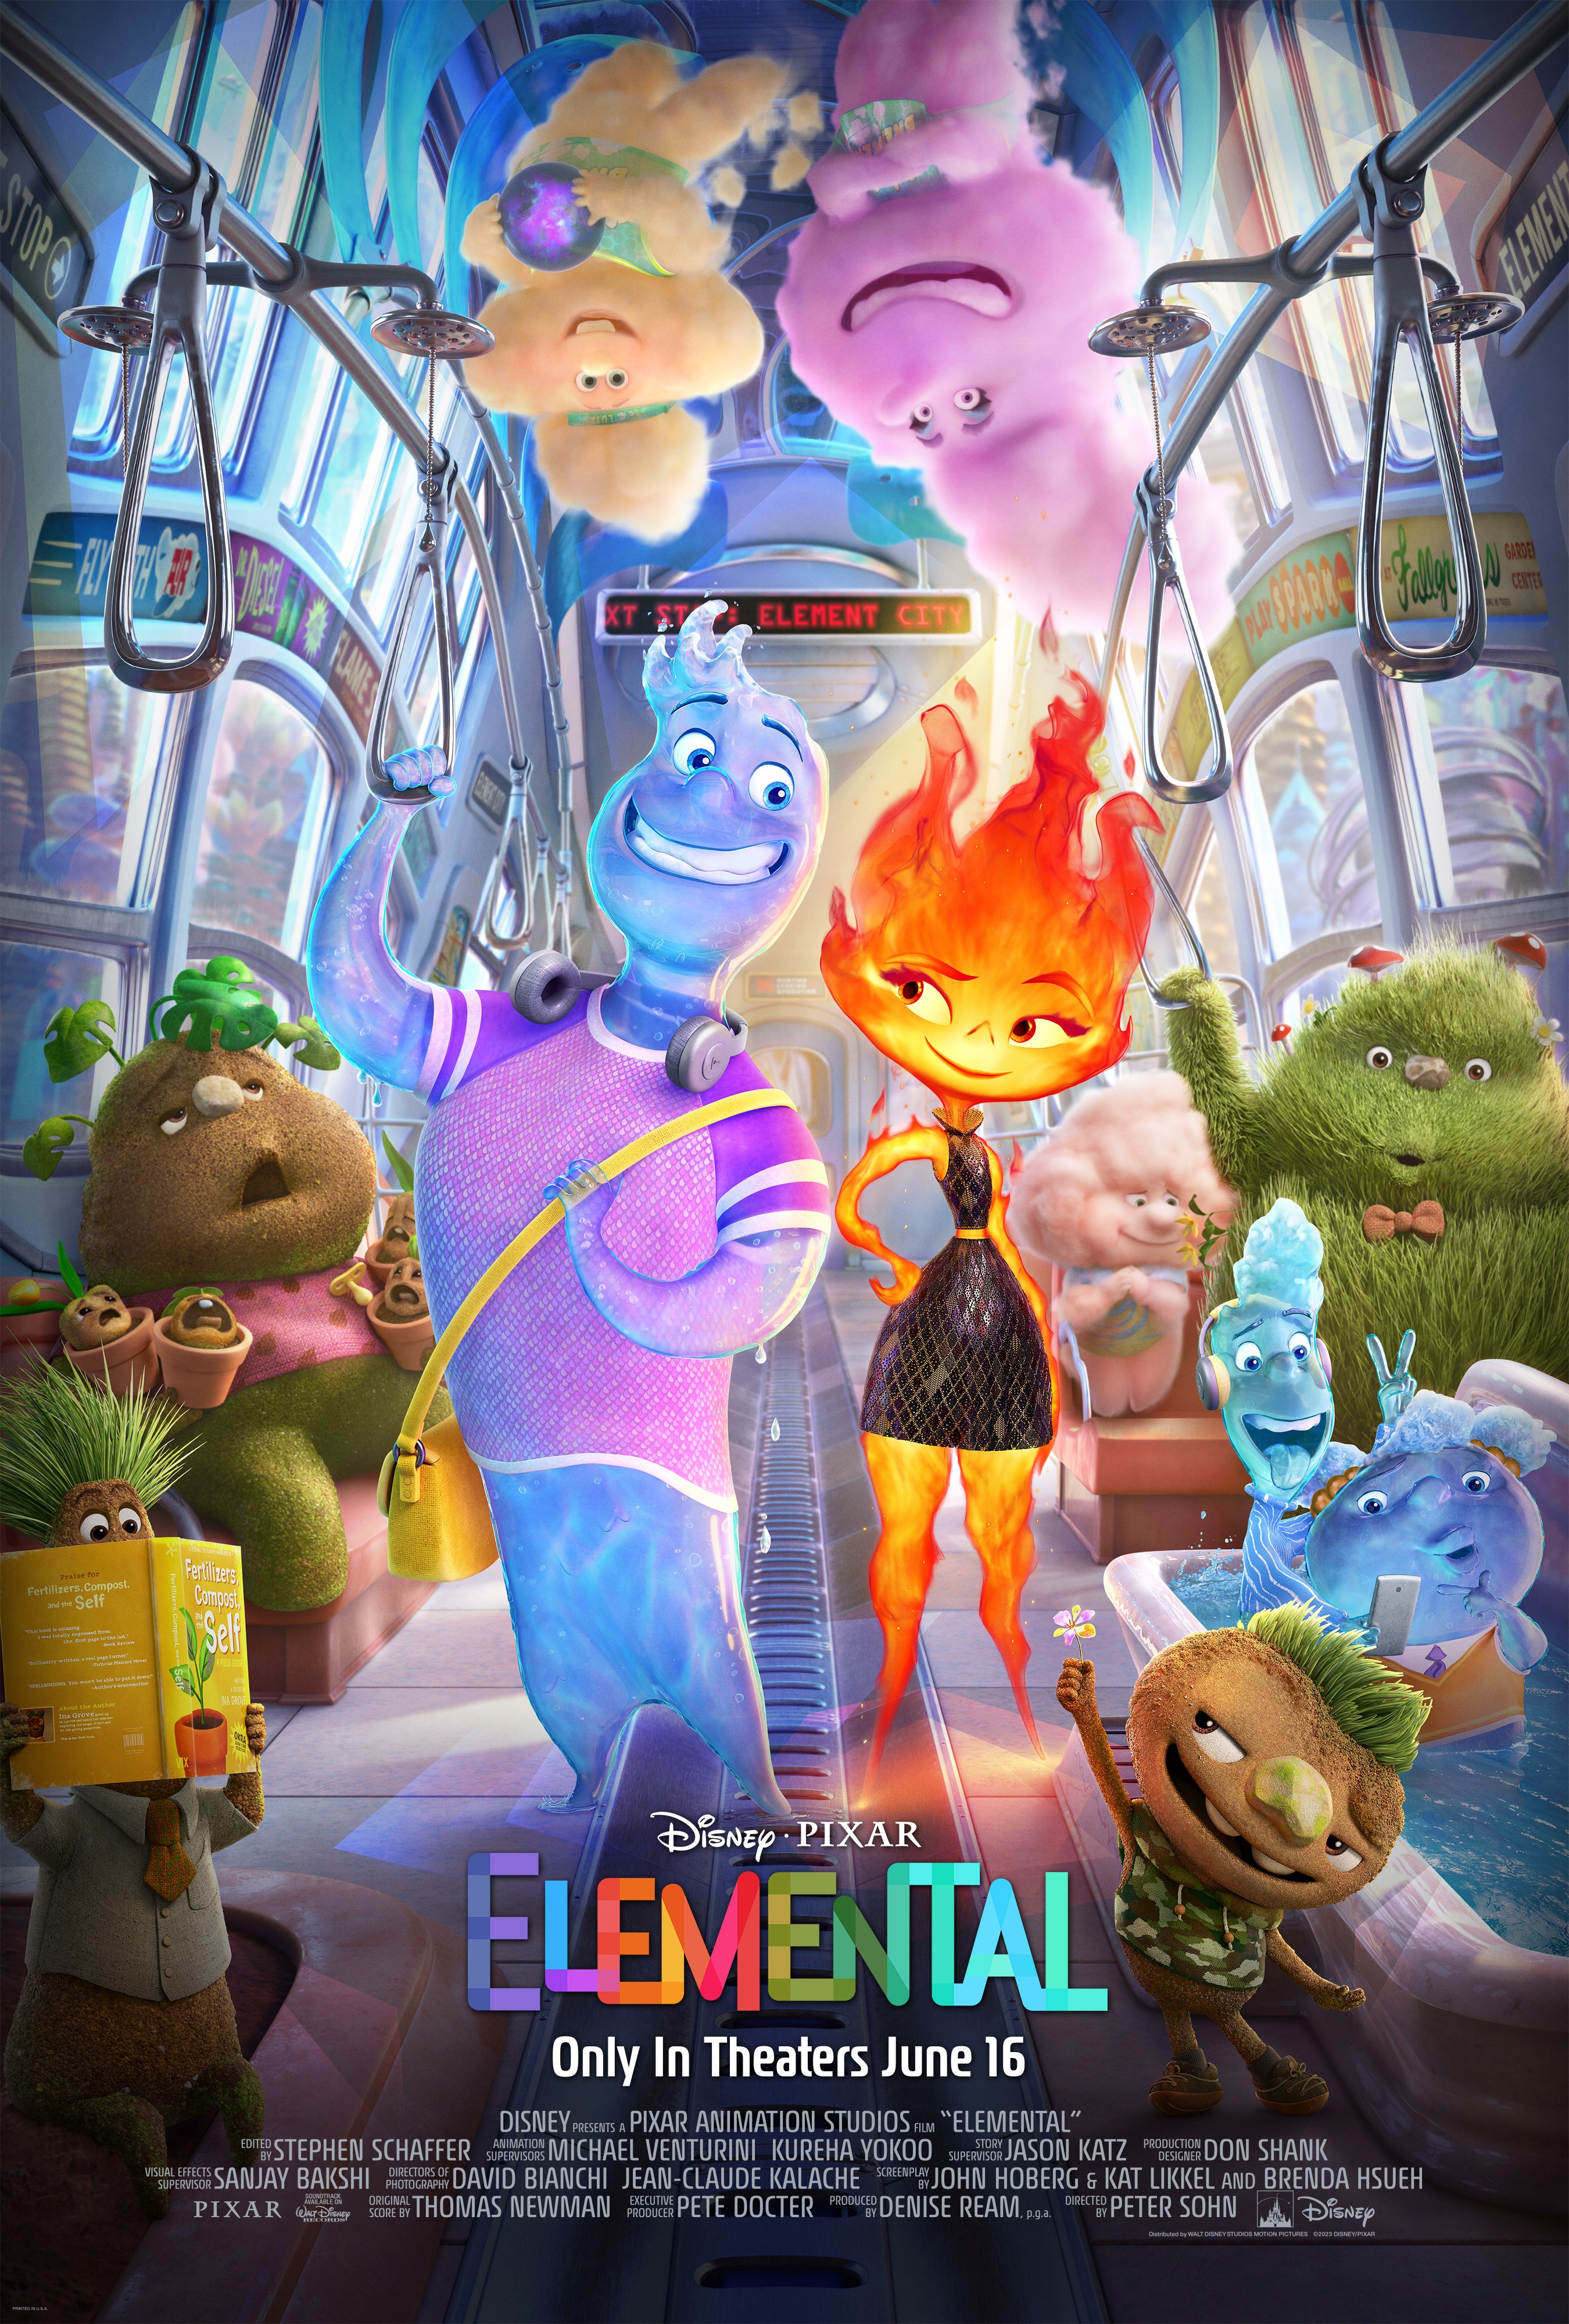 Elemental - Trailer & Disney+